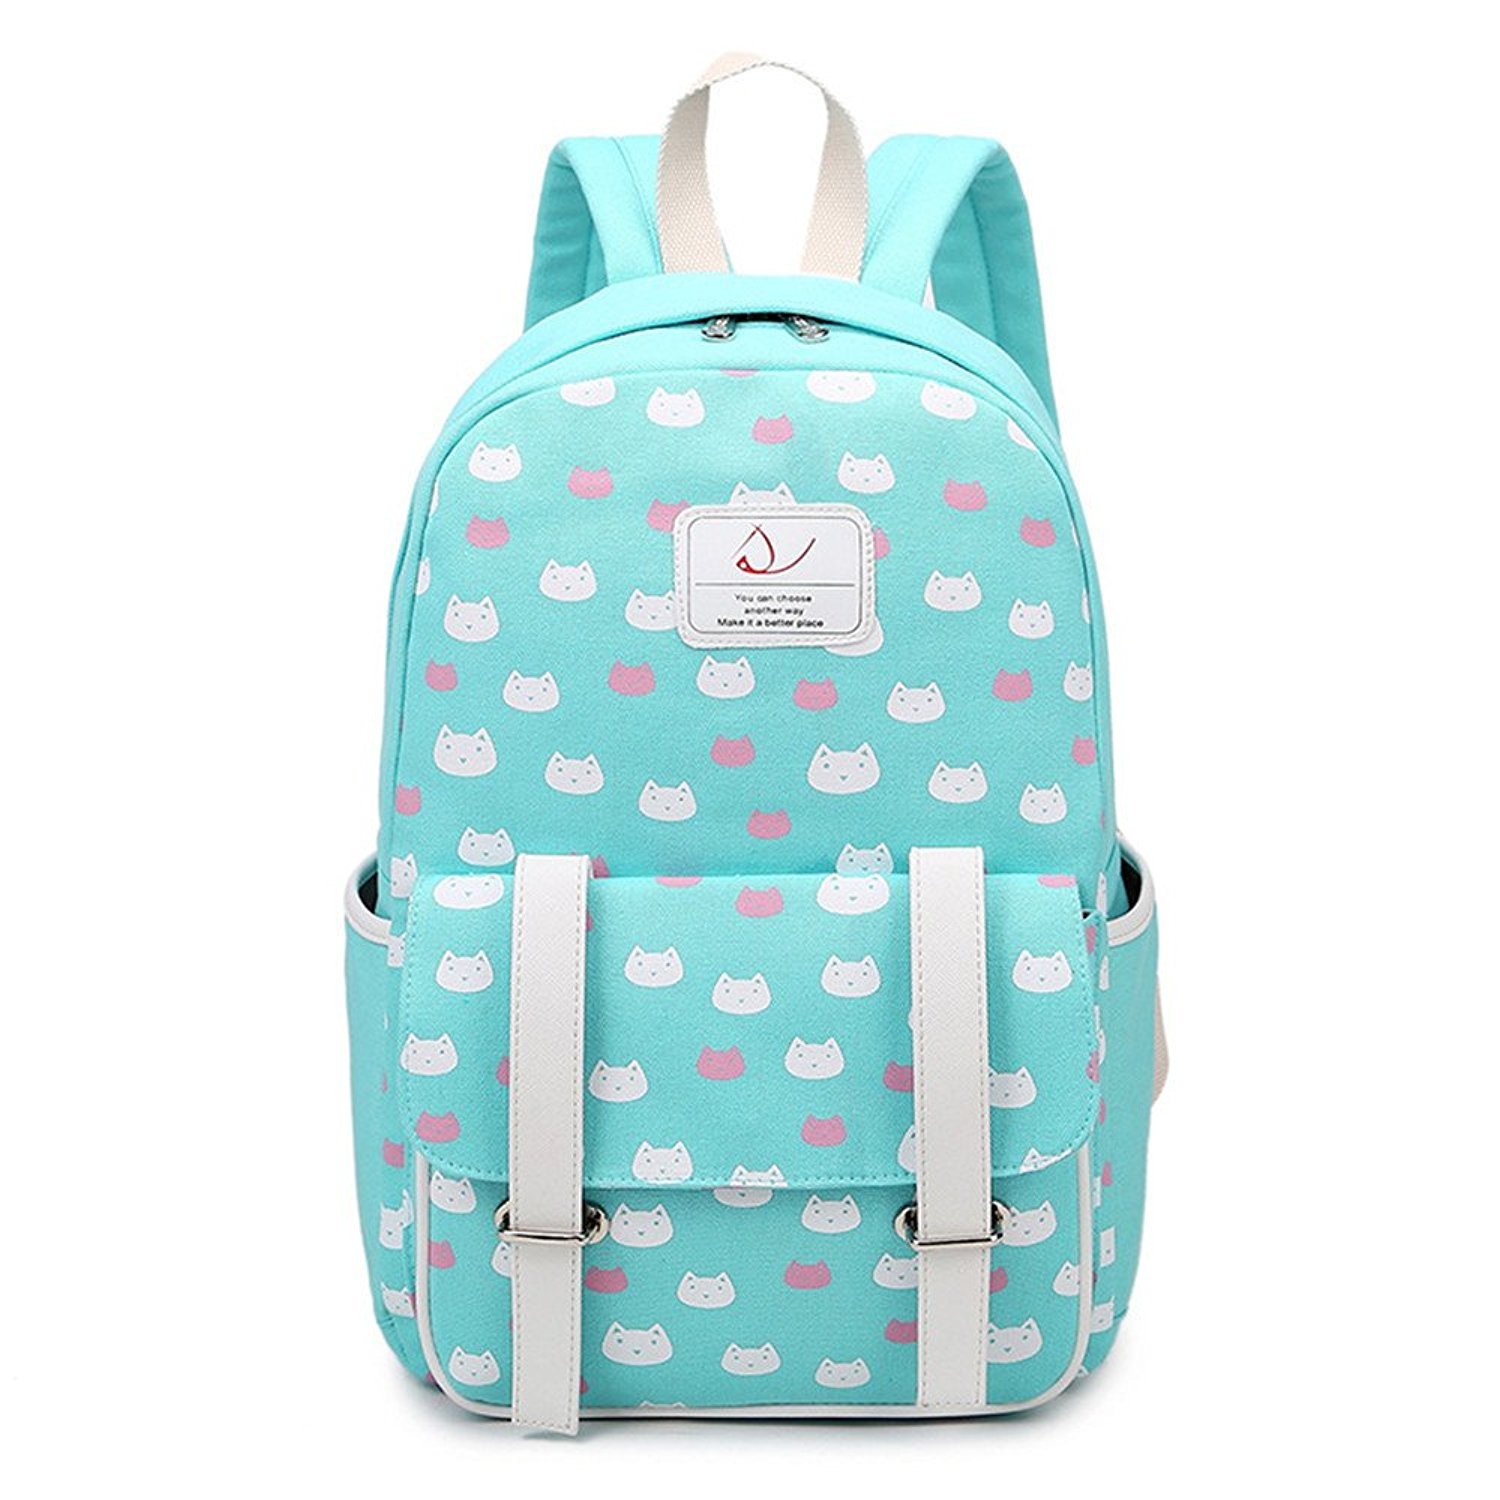 Cute Cat Backpack Casual Canvas Shoulder School Bag Bookbags for Girls Teens - $26.99